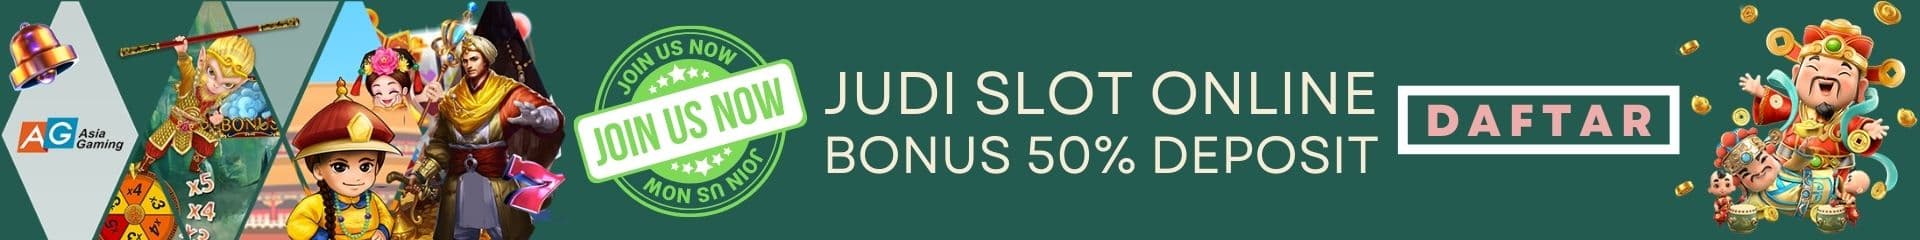 judi-slot-online-bonus-50.jpeg?e1c49be3a3da72c45d03c0b8a019b64c